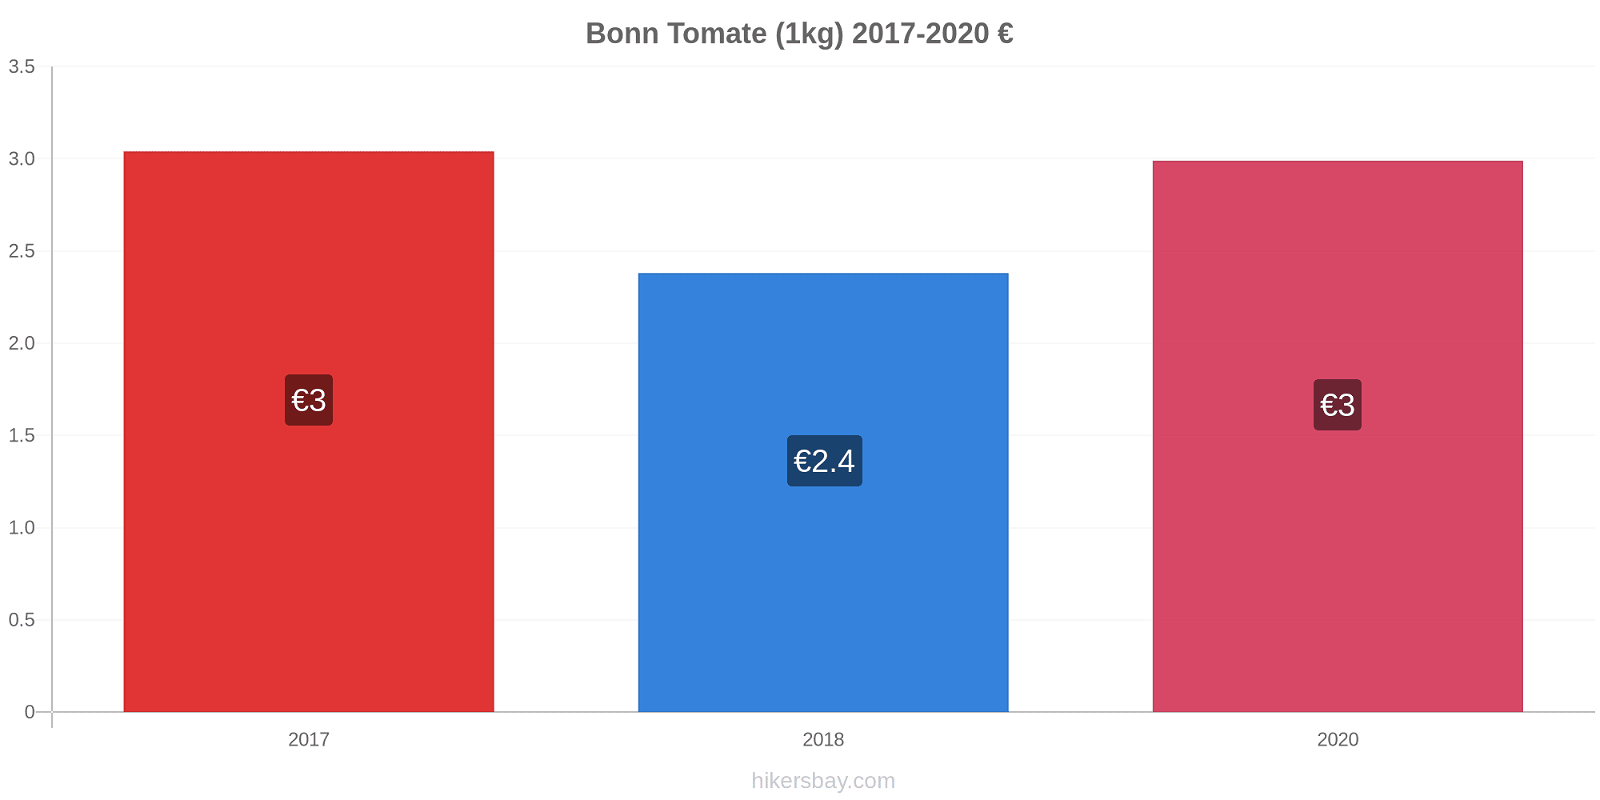 Bonn changements de prix Tomate (1kg) hikersbay.com